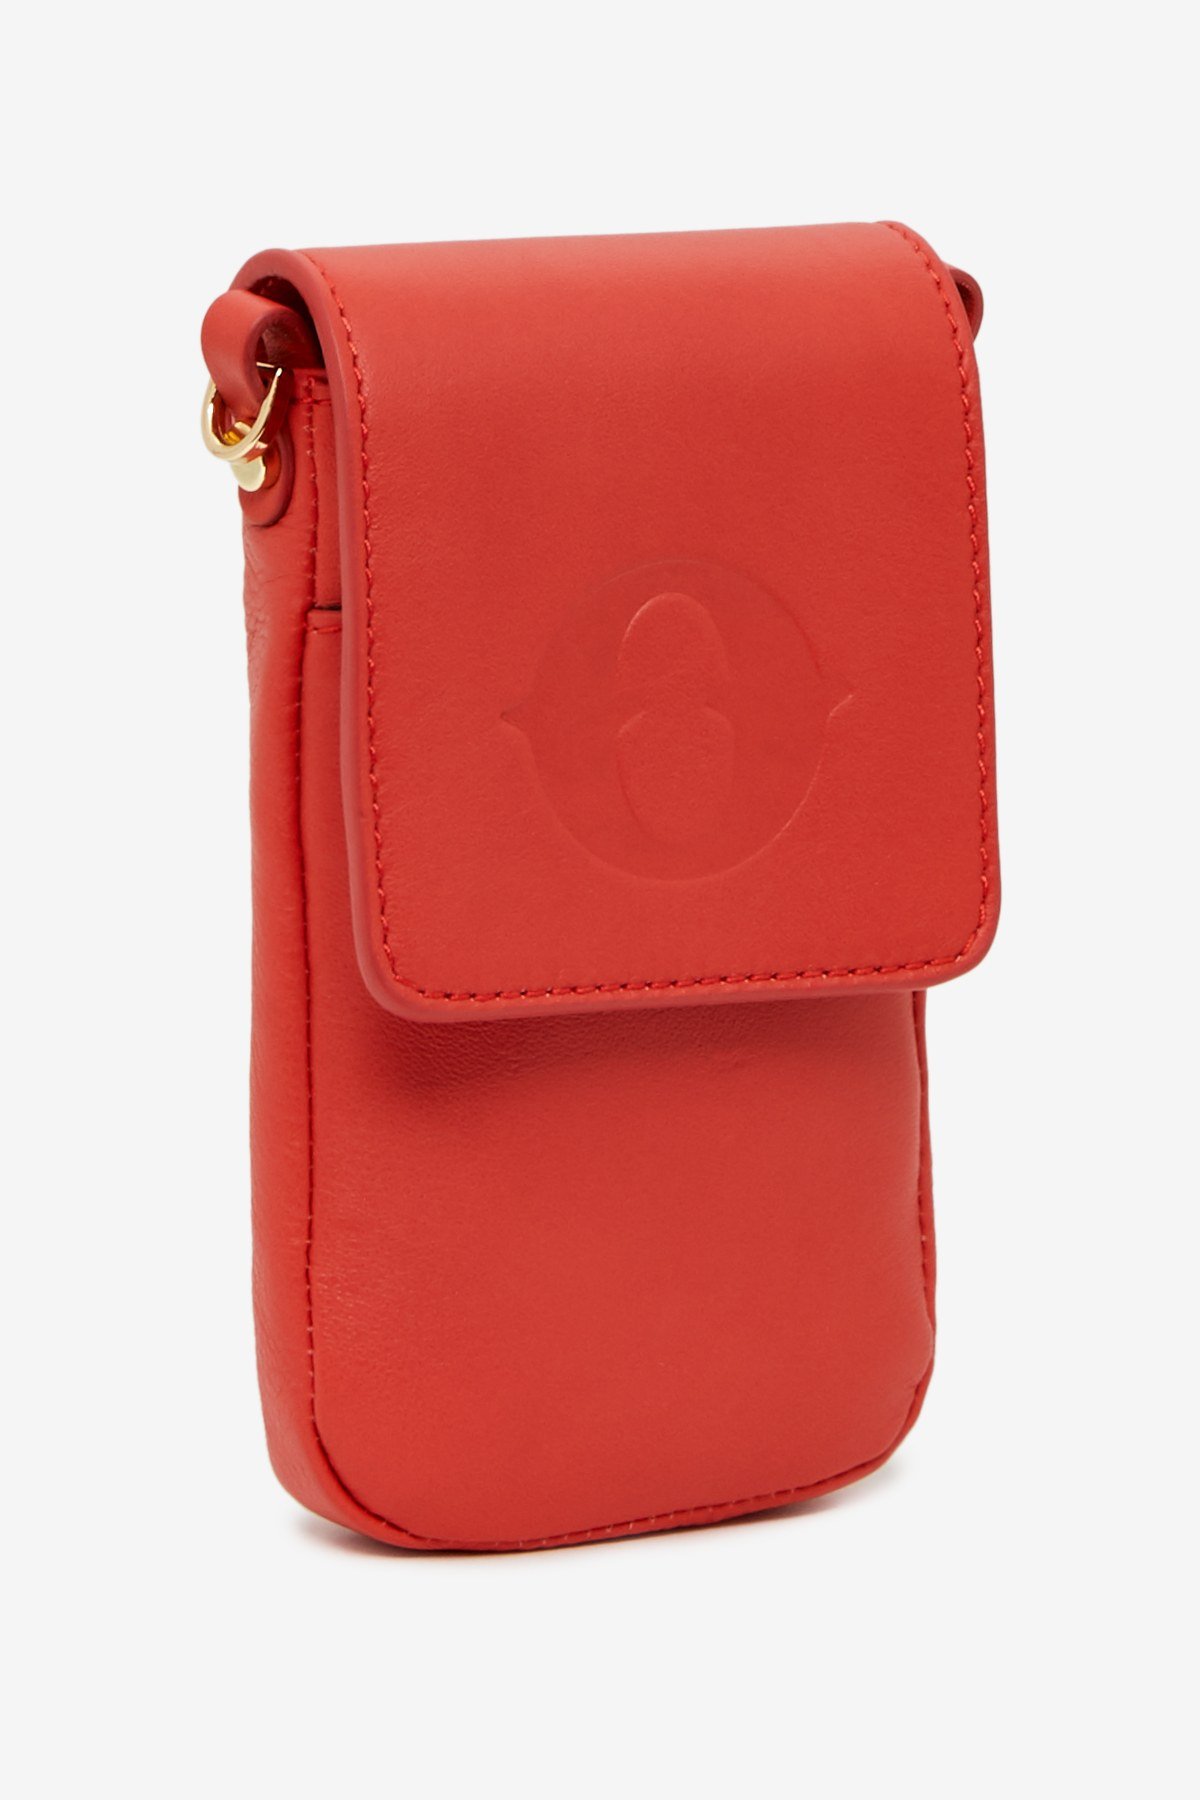 18cm Crossbody Phone Pouch For Women, Pu Leather Mobile Phone Shoulder Bag  Handbag Purse Wallet Pouch | Fruugo KR